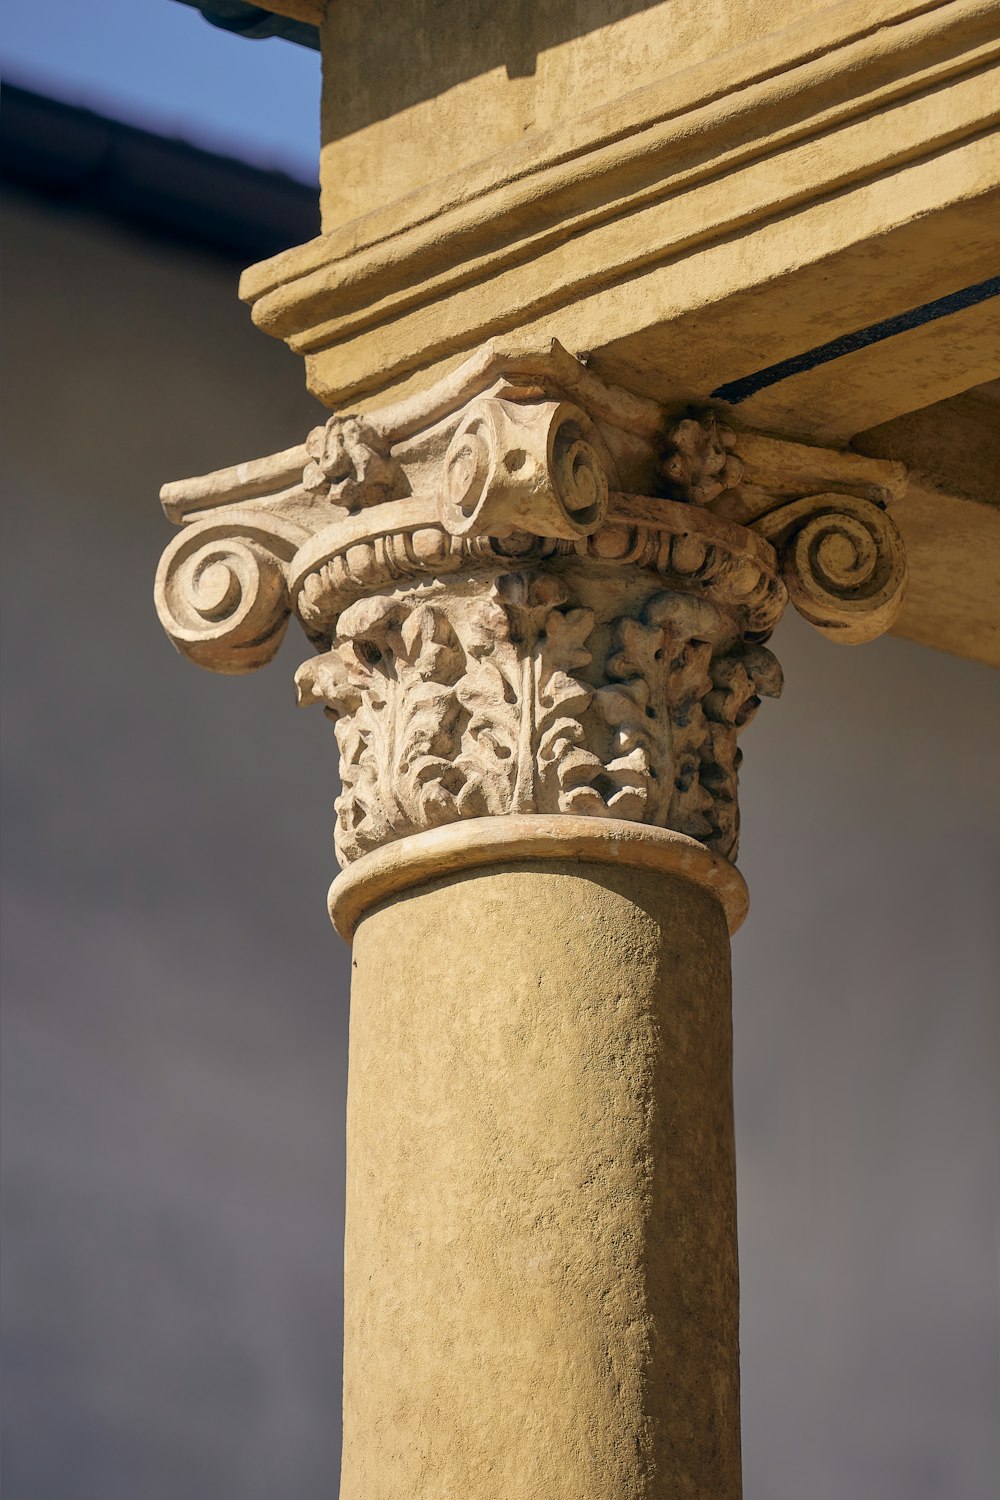 a close up of a pillar with a decorative decoration